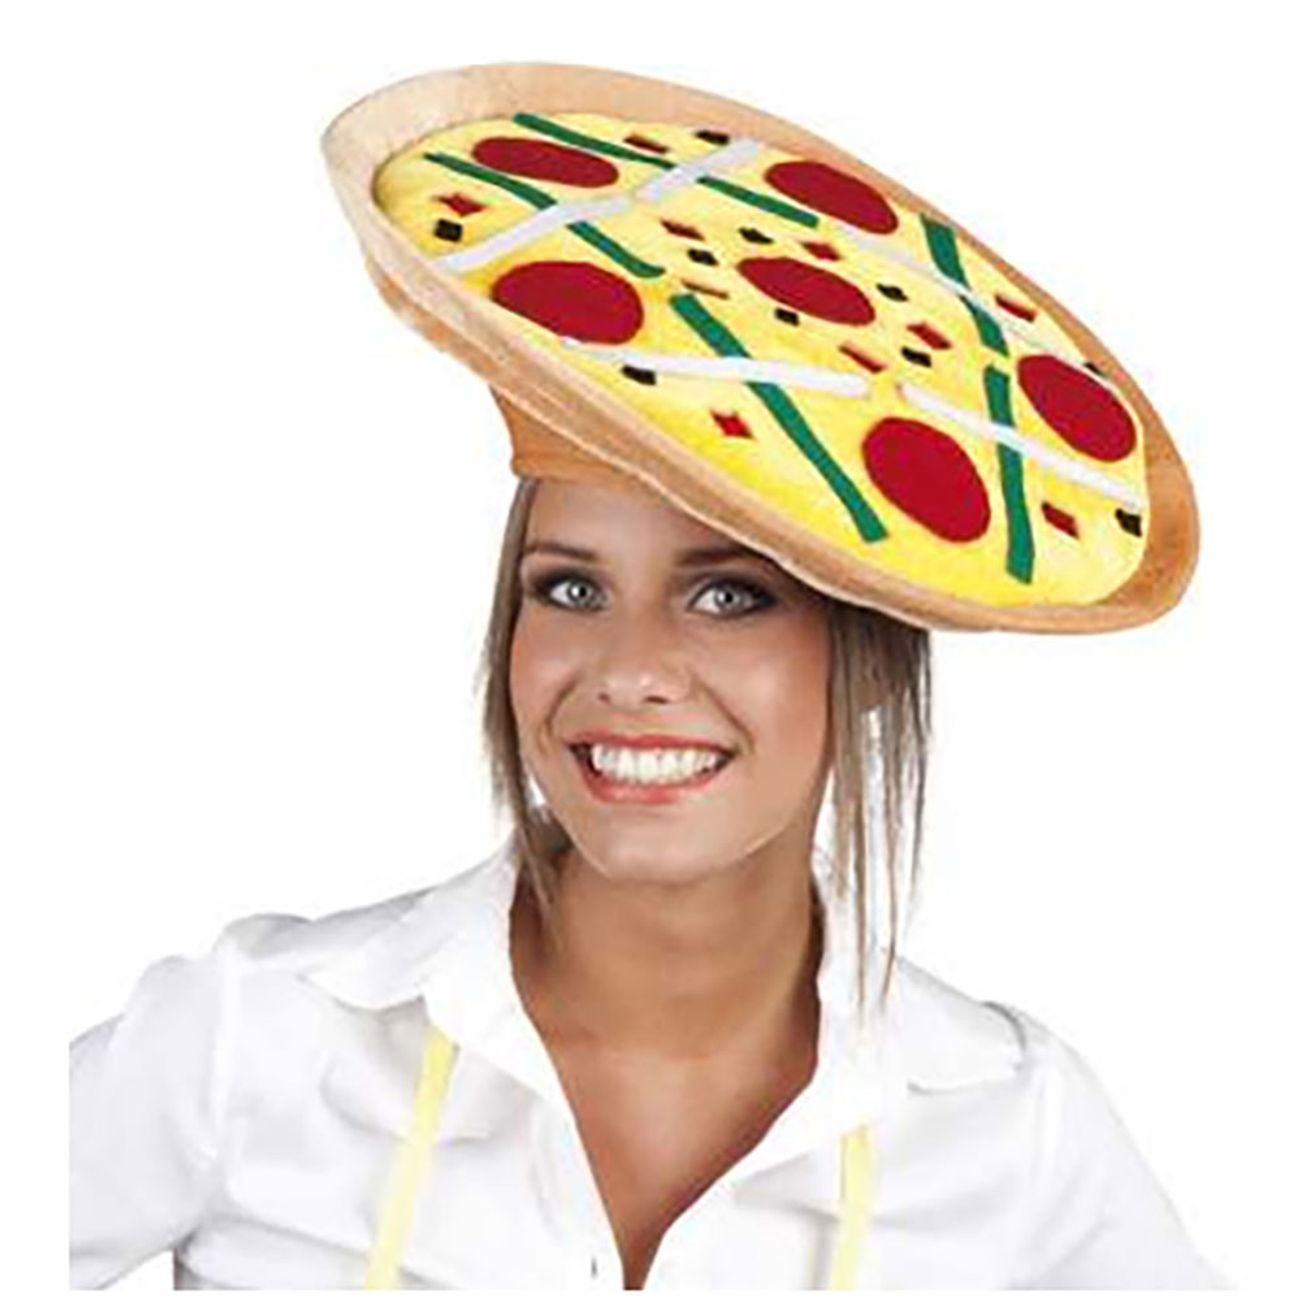 pizzahatt-82747-1